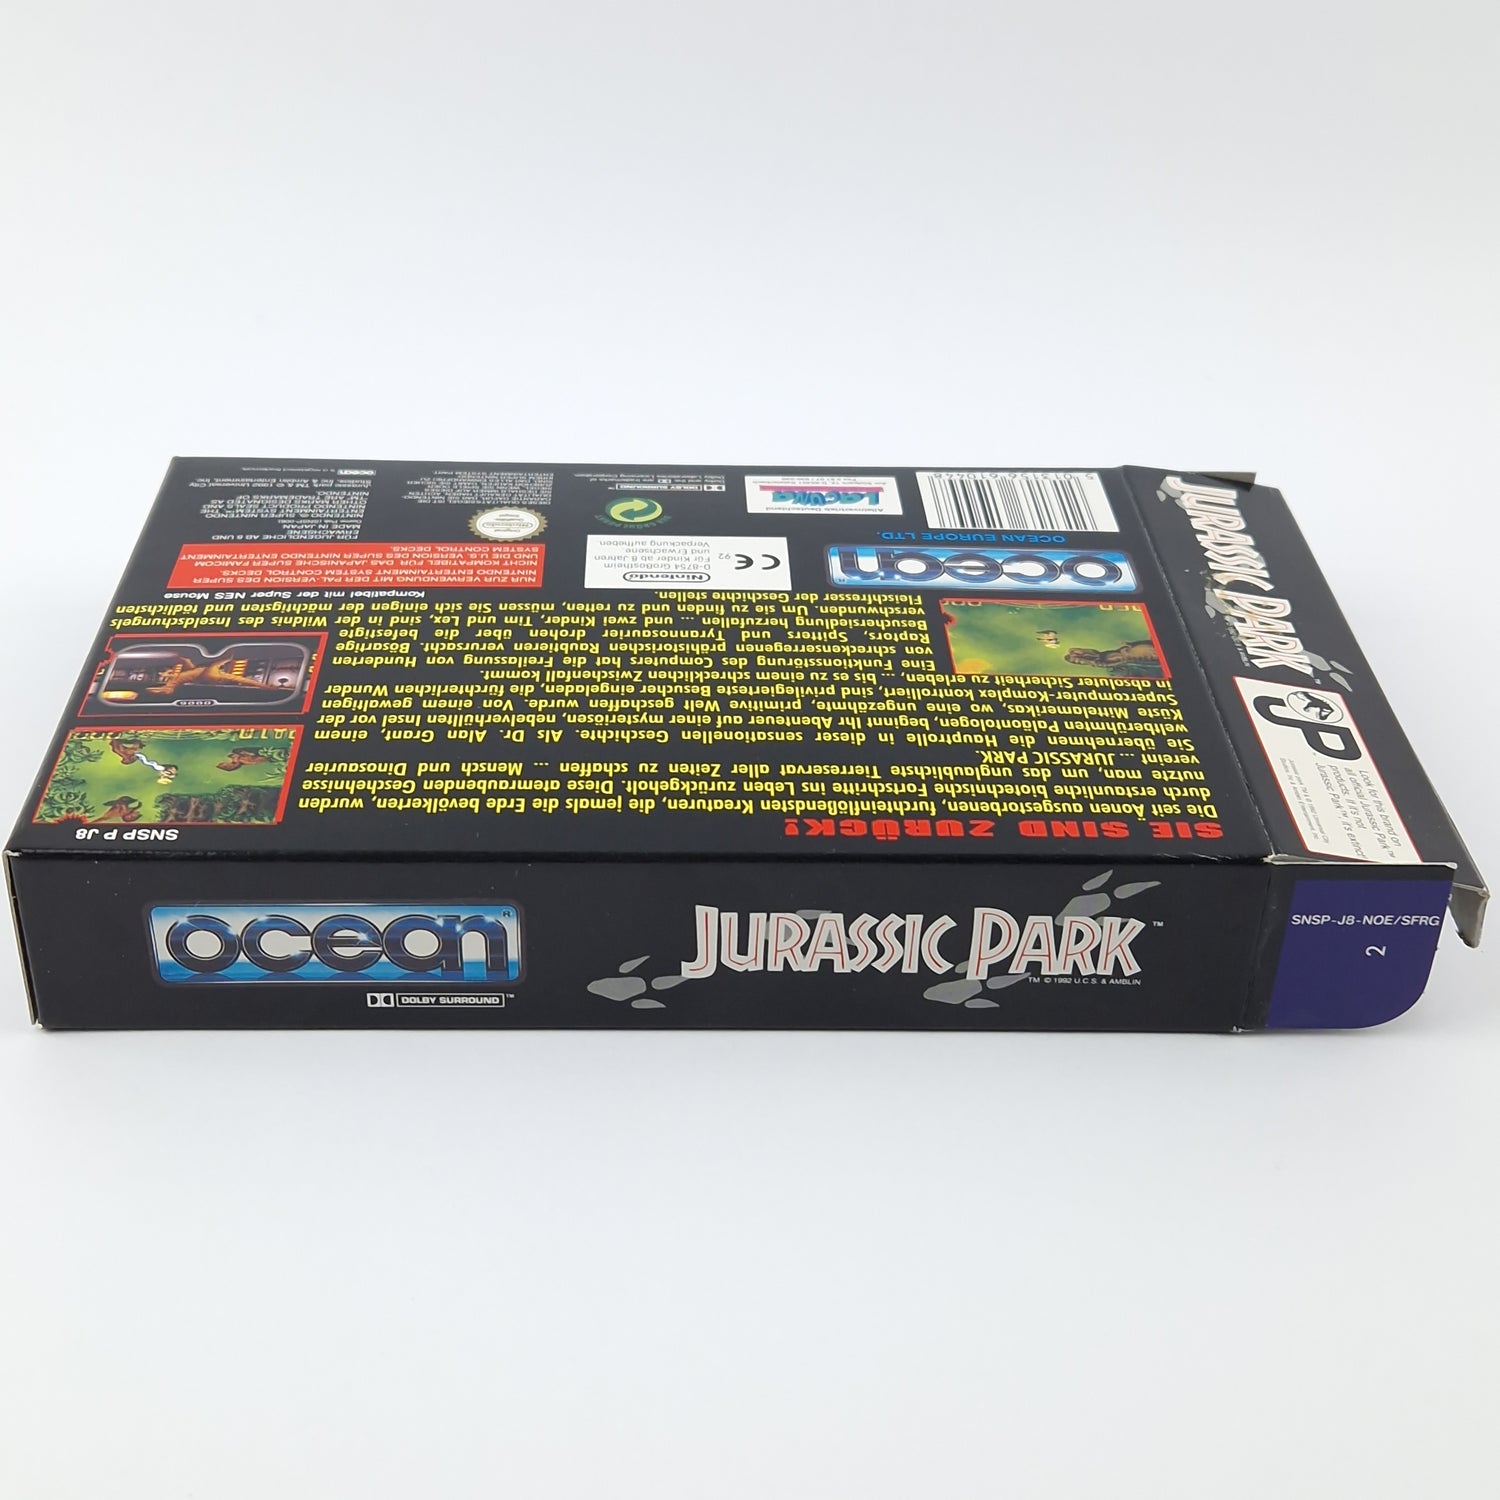 Super Nintendo Game: Jurassic Park - Module Instructions OVP cib | SNES PAL